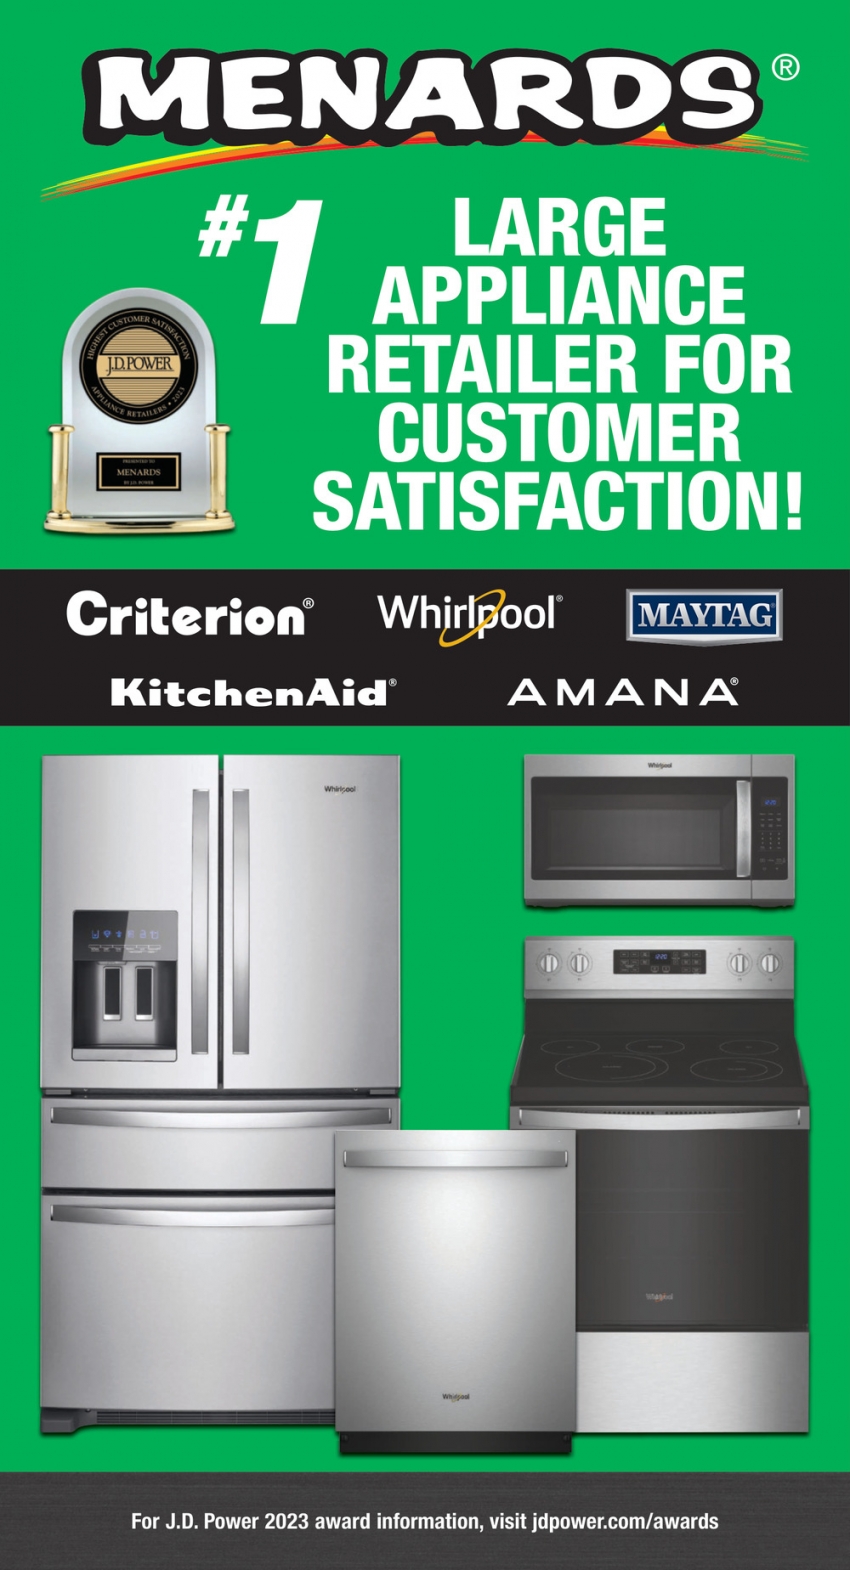 #1 Large Appliance Retailer for Customer Satisfaction